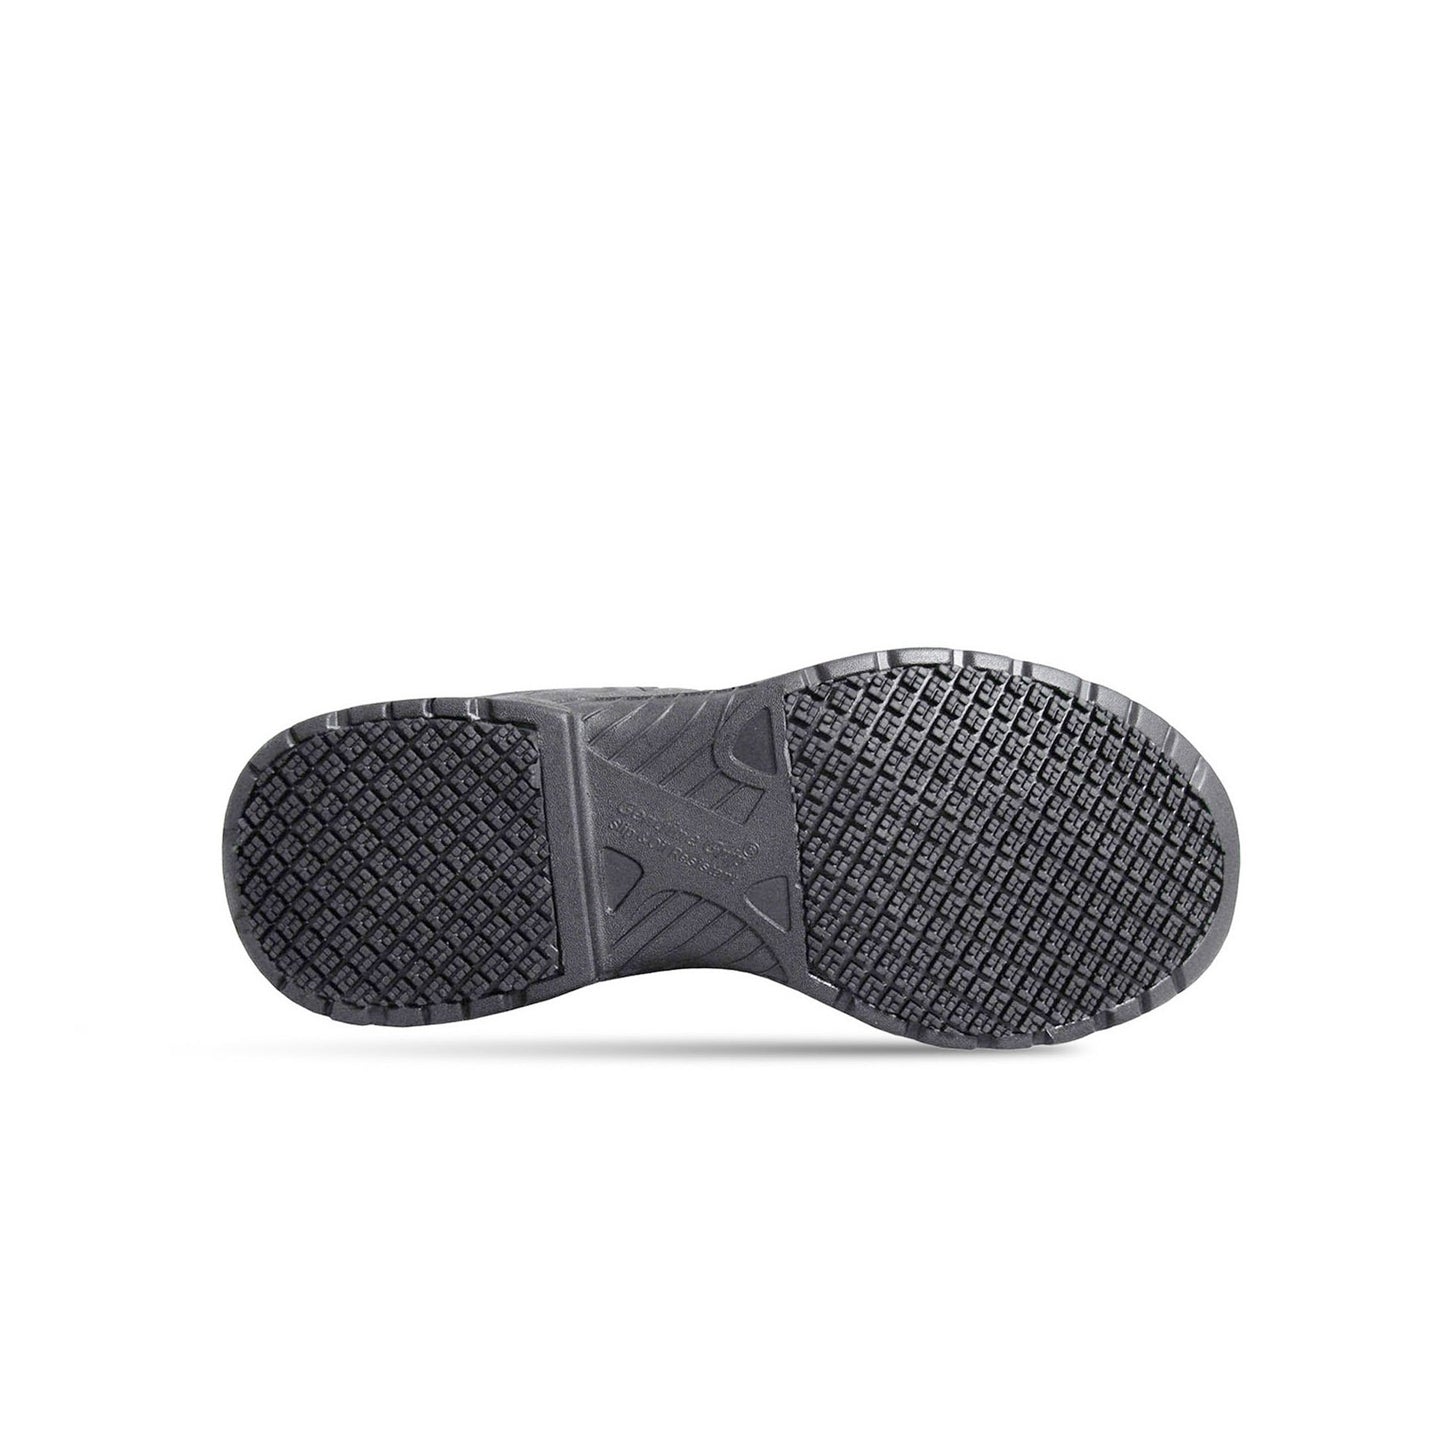 Jogger Slip Resistant Safety Toe::Black